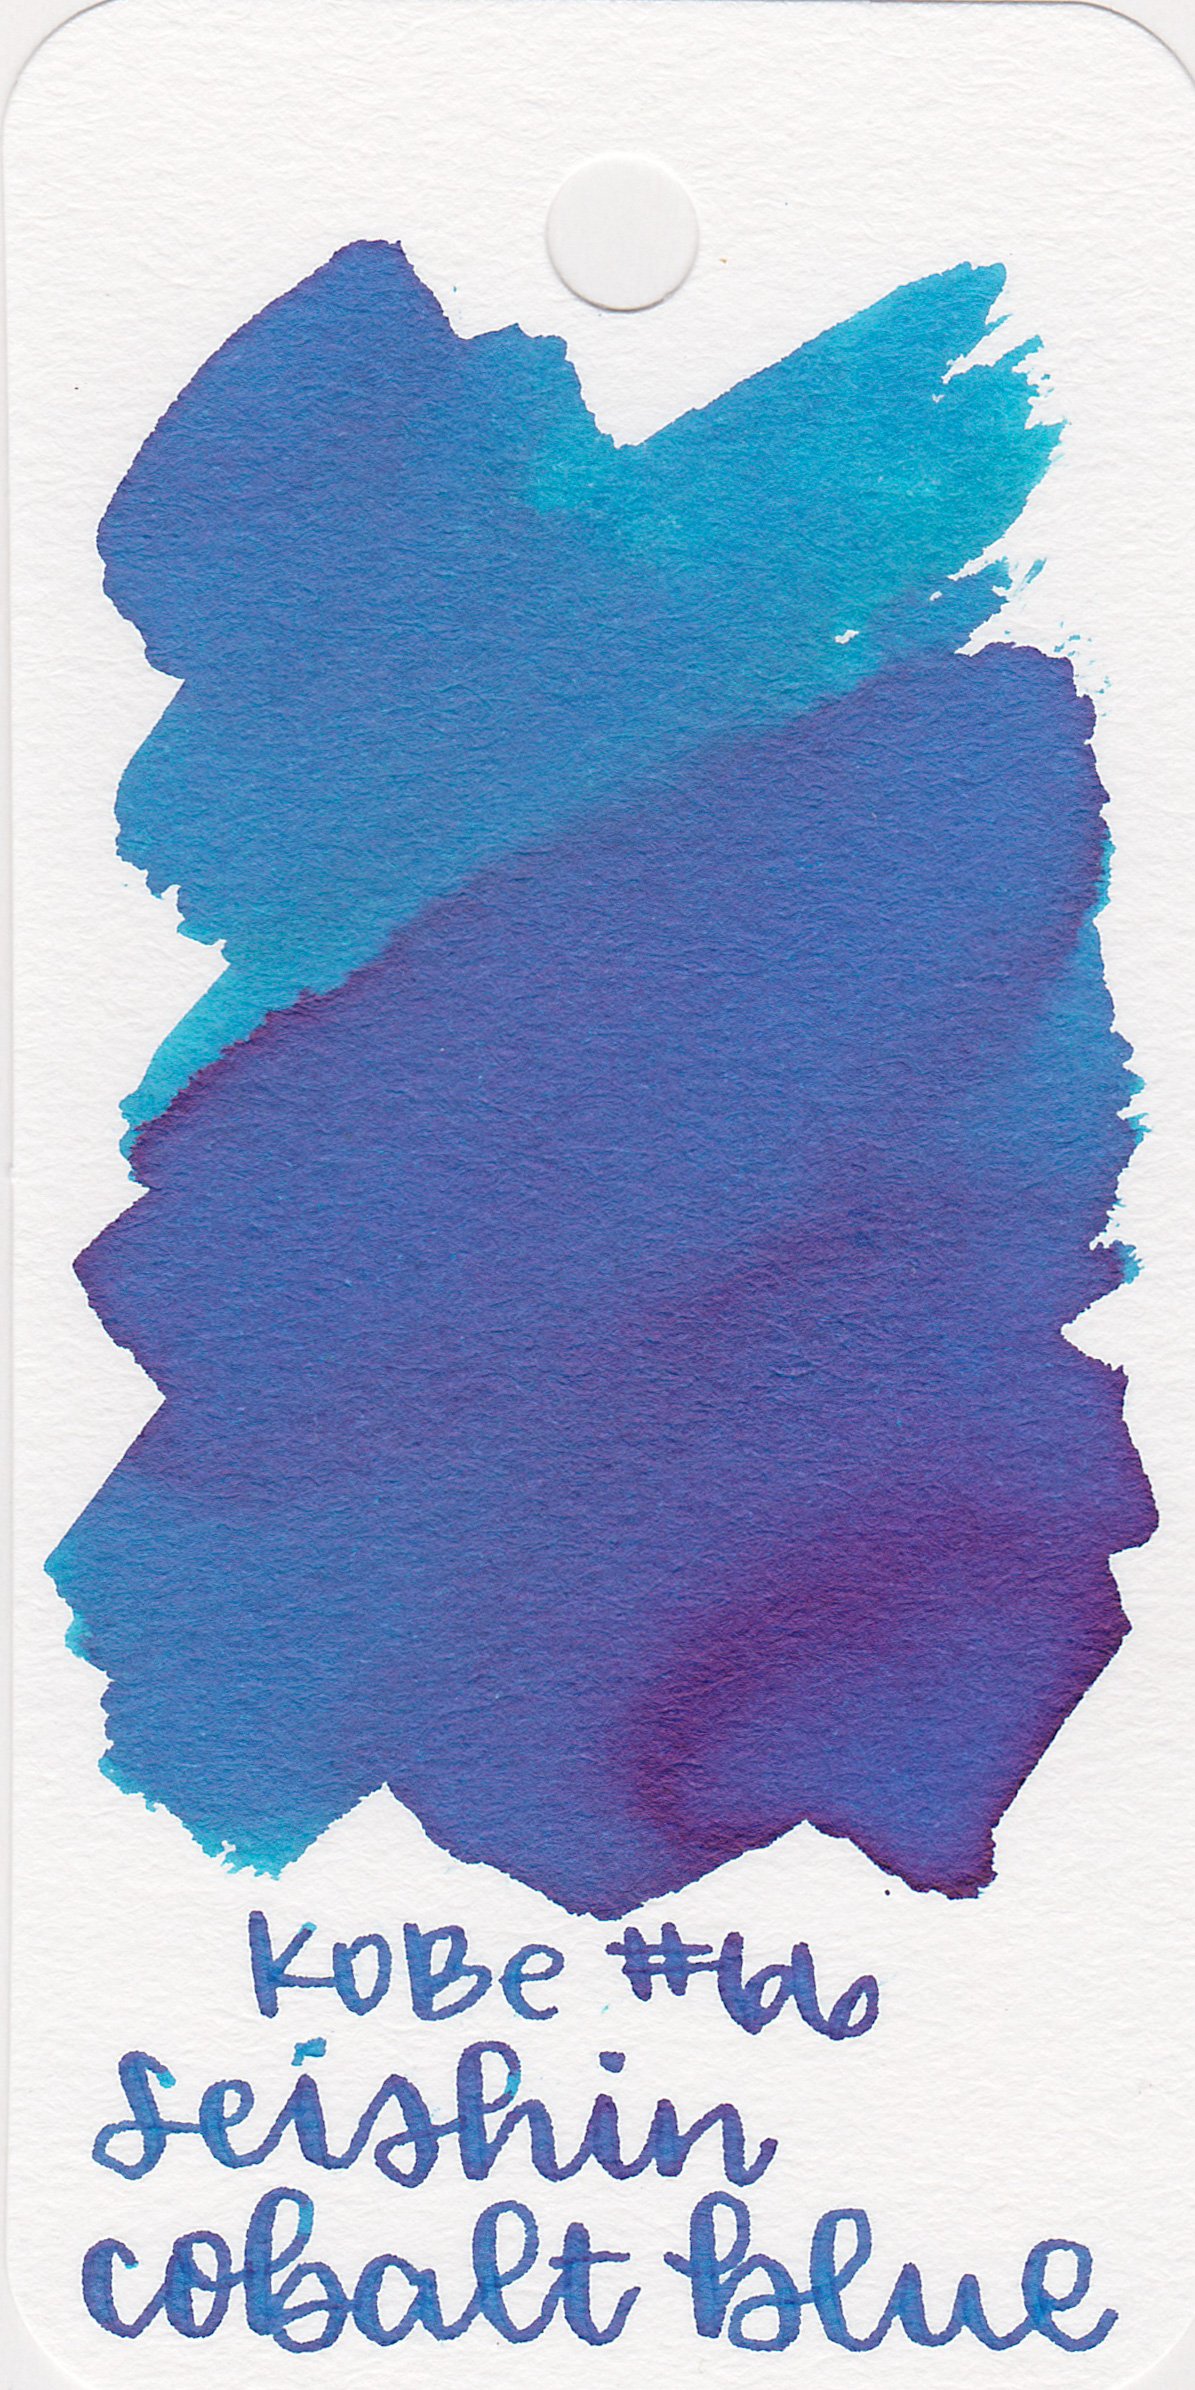 nk-seshin-cobalt-blue-1.jpg